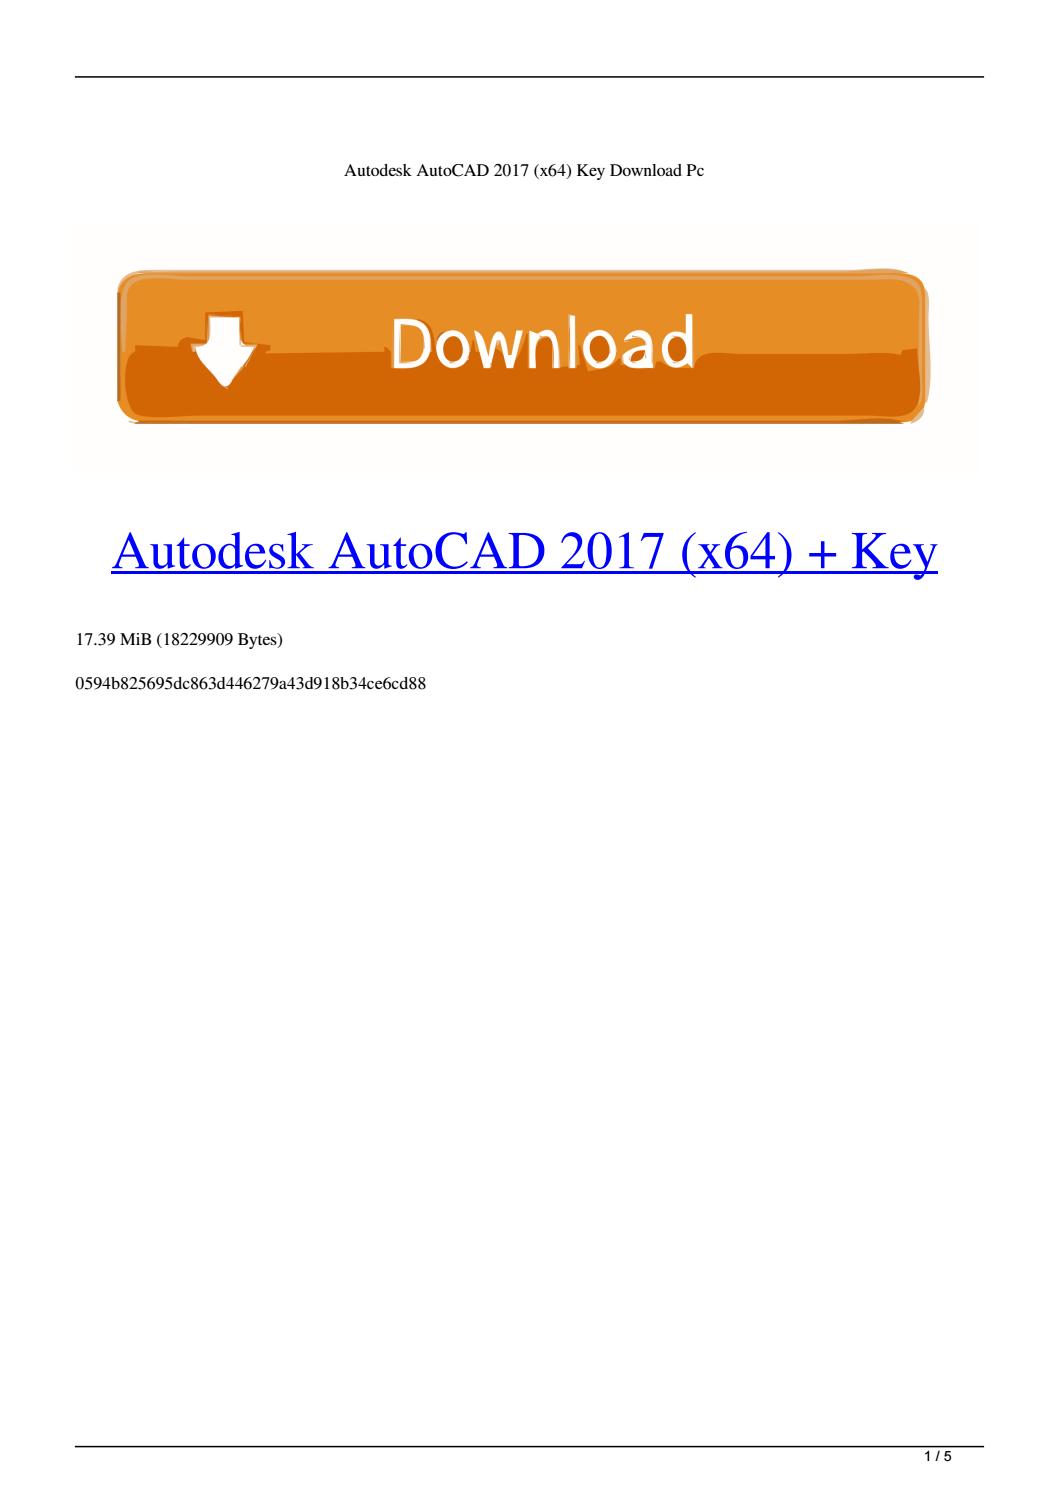 Autocad 17 Torrent Download Podclever